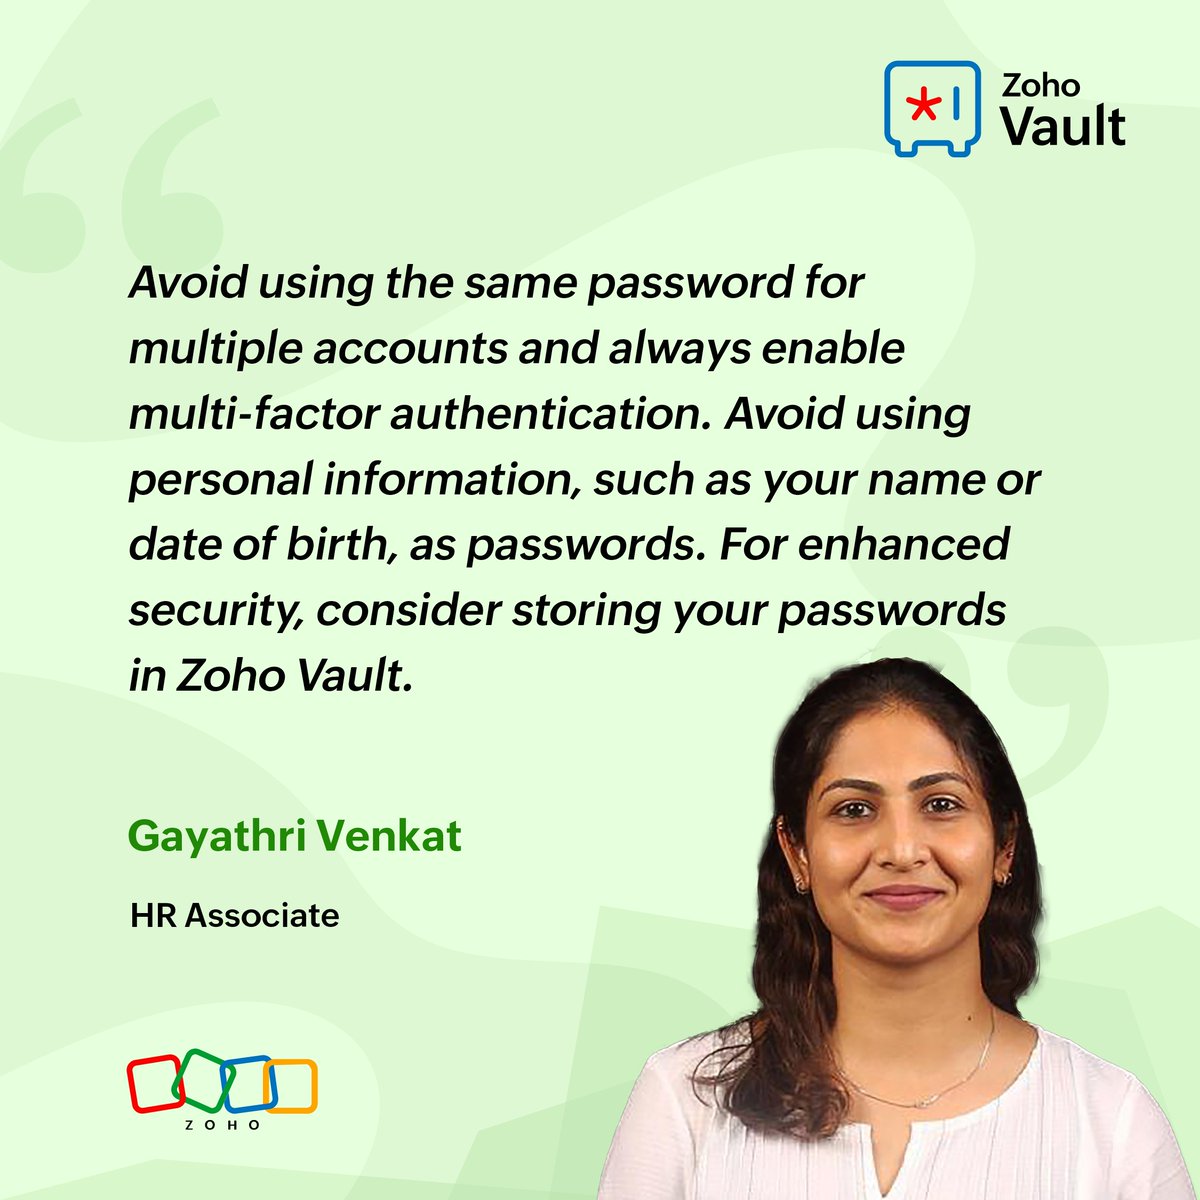 Password security tip of the day from Gayathri Venkat, HR Associate. 😀 #WorldPasswordDay #StaySafeOnline